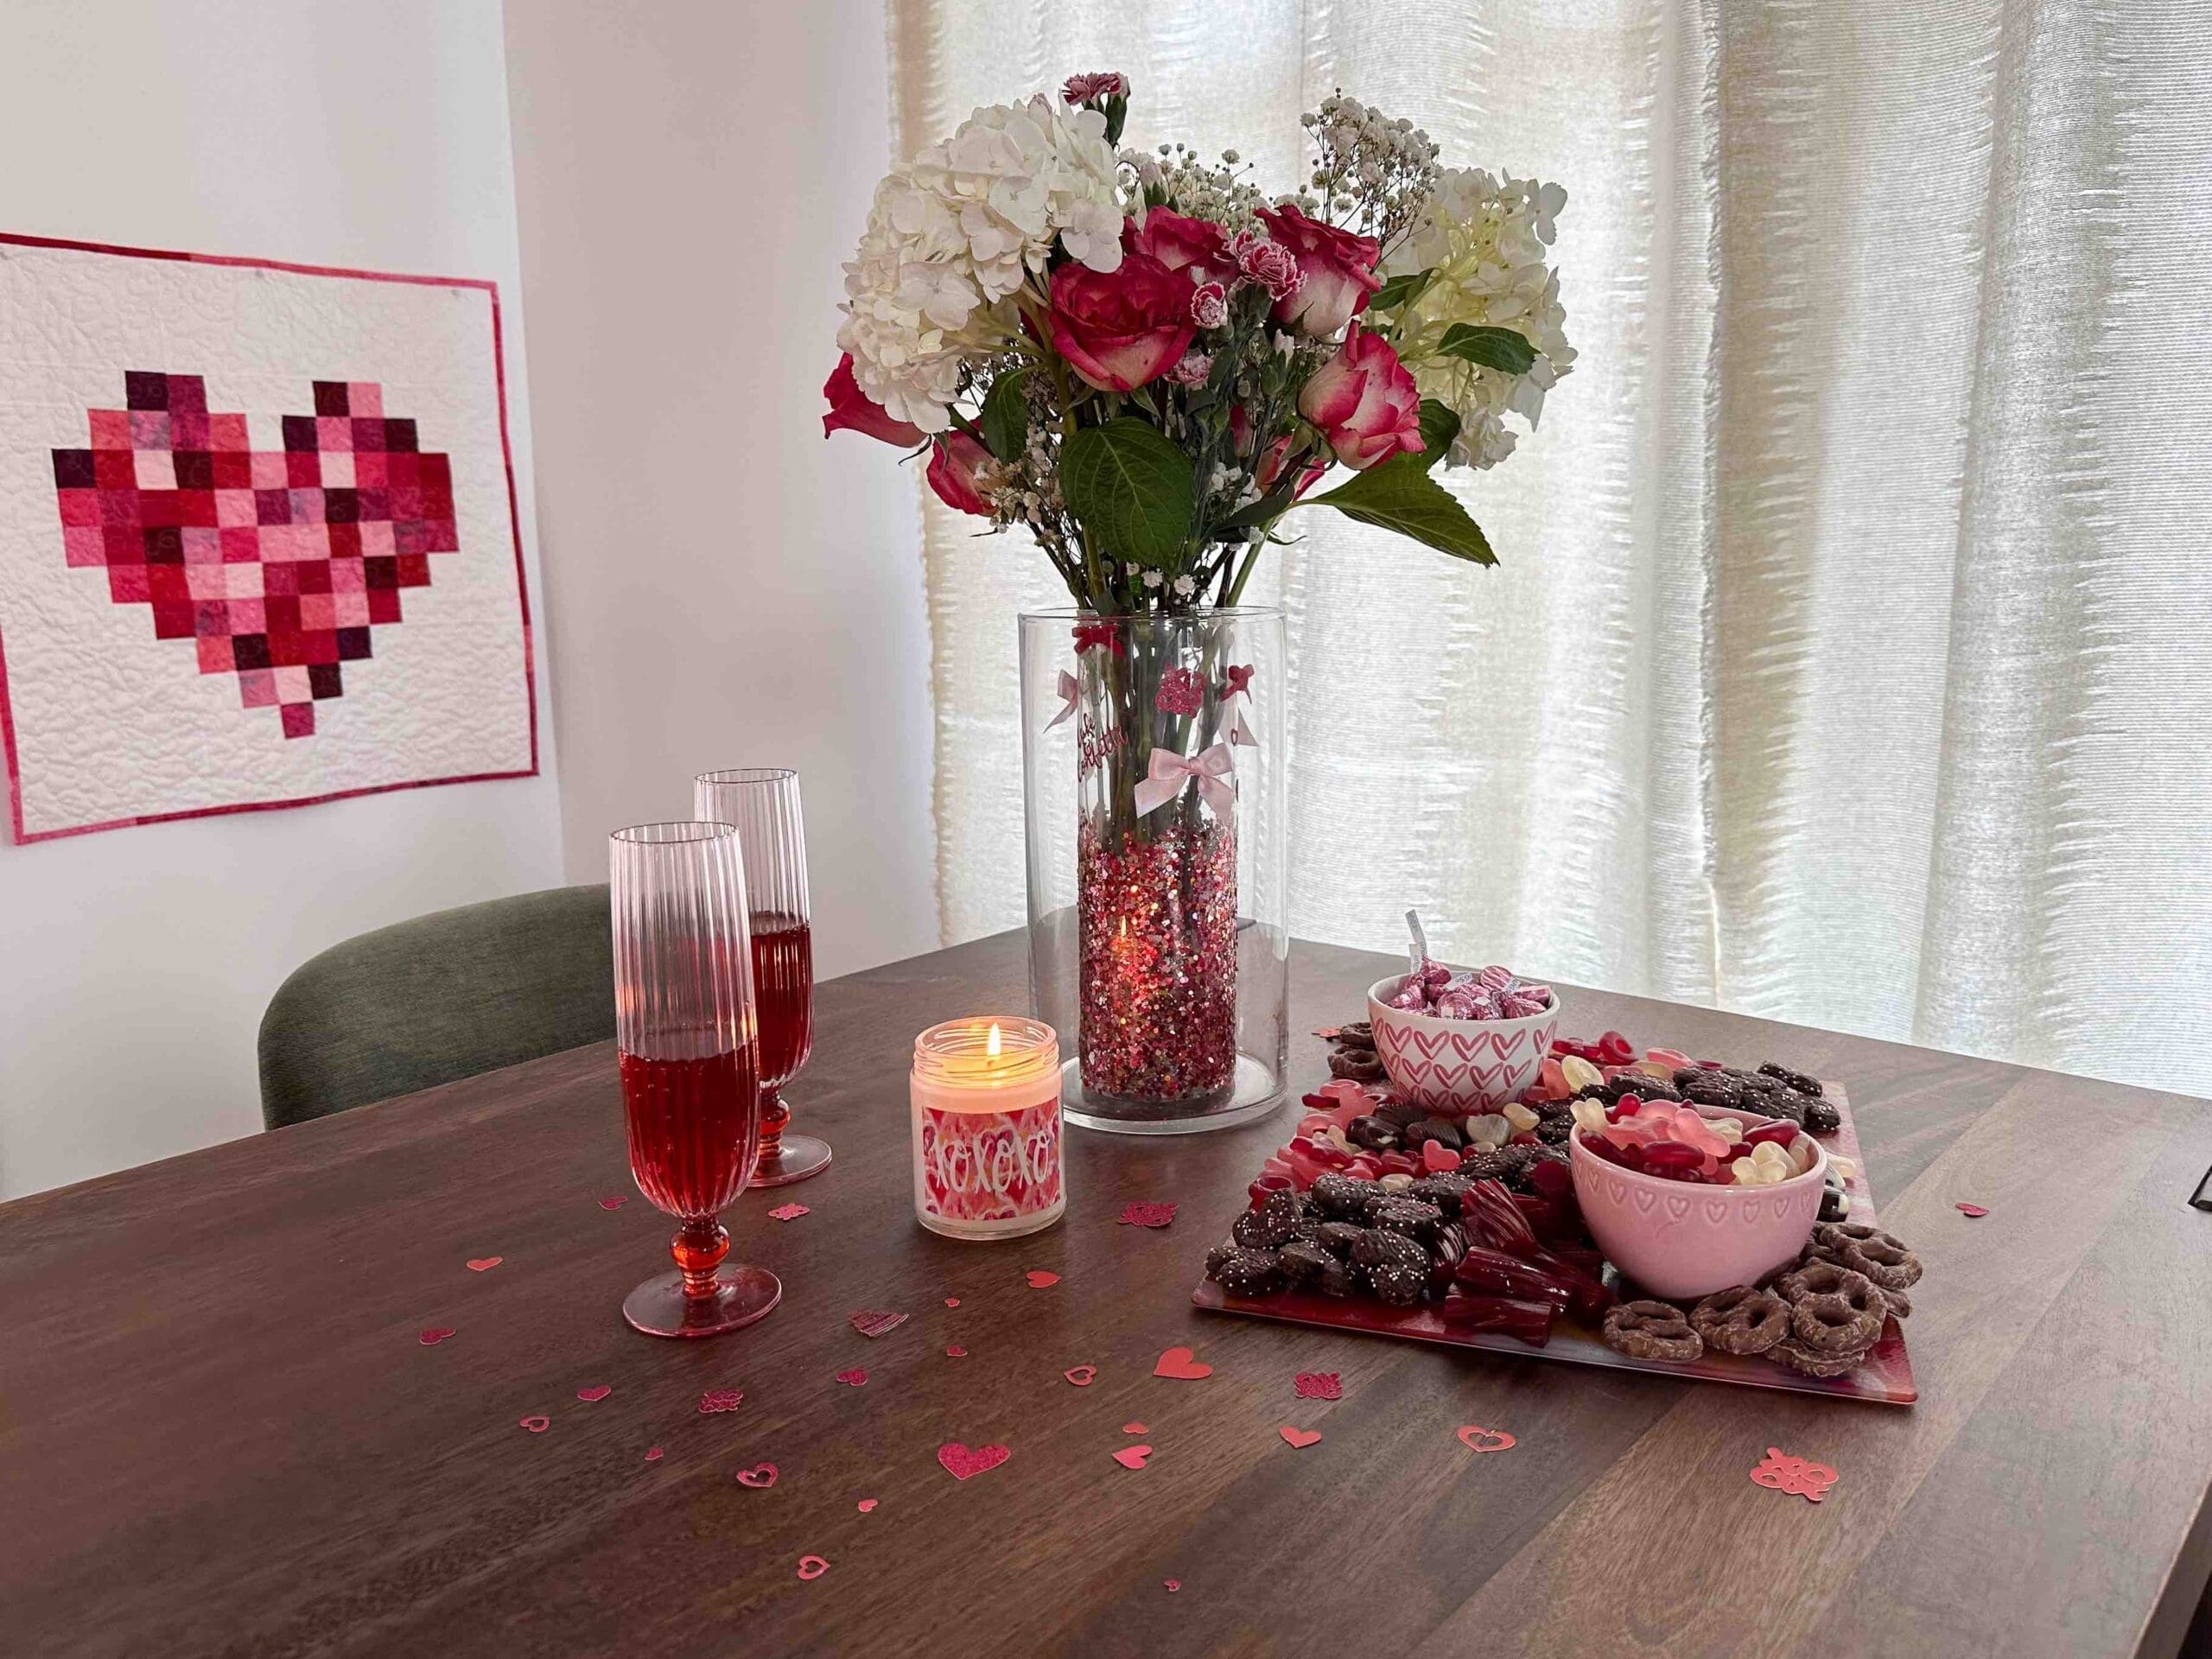 Cricut Confetti: Quickly Glam Up a Vase for Valentine’s Day